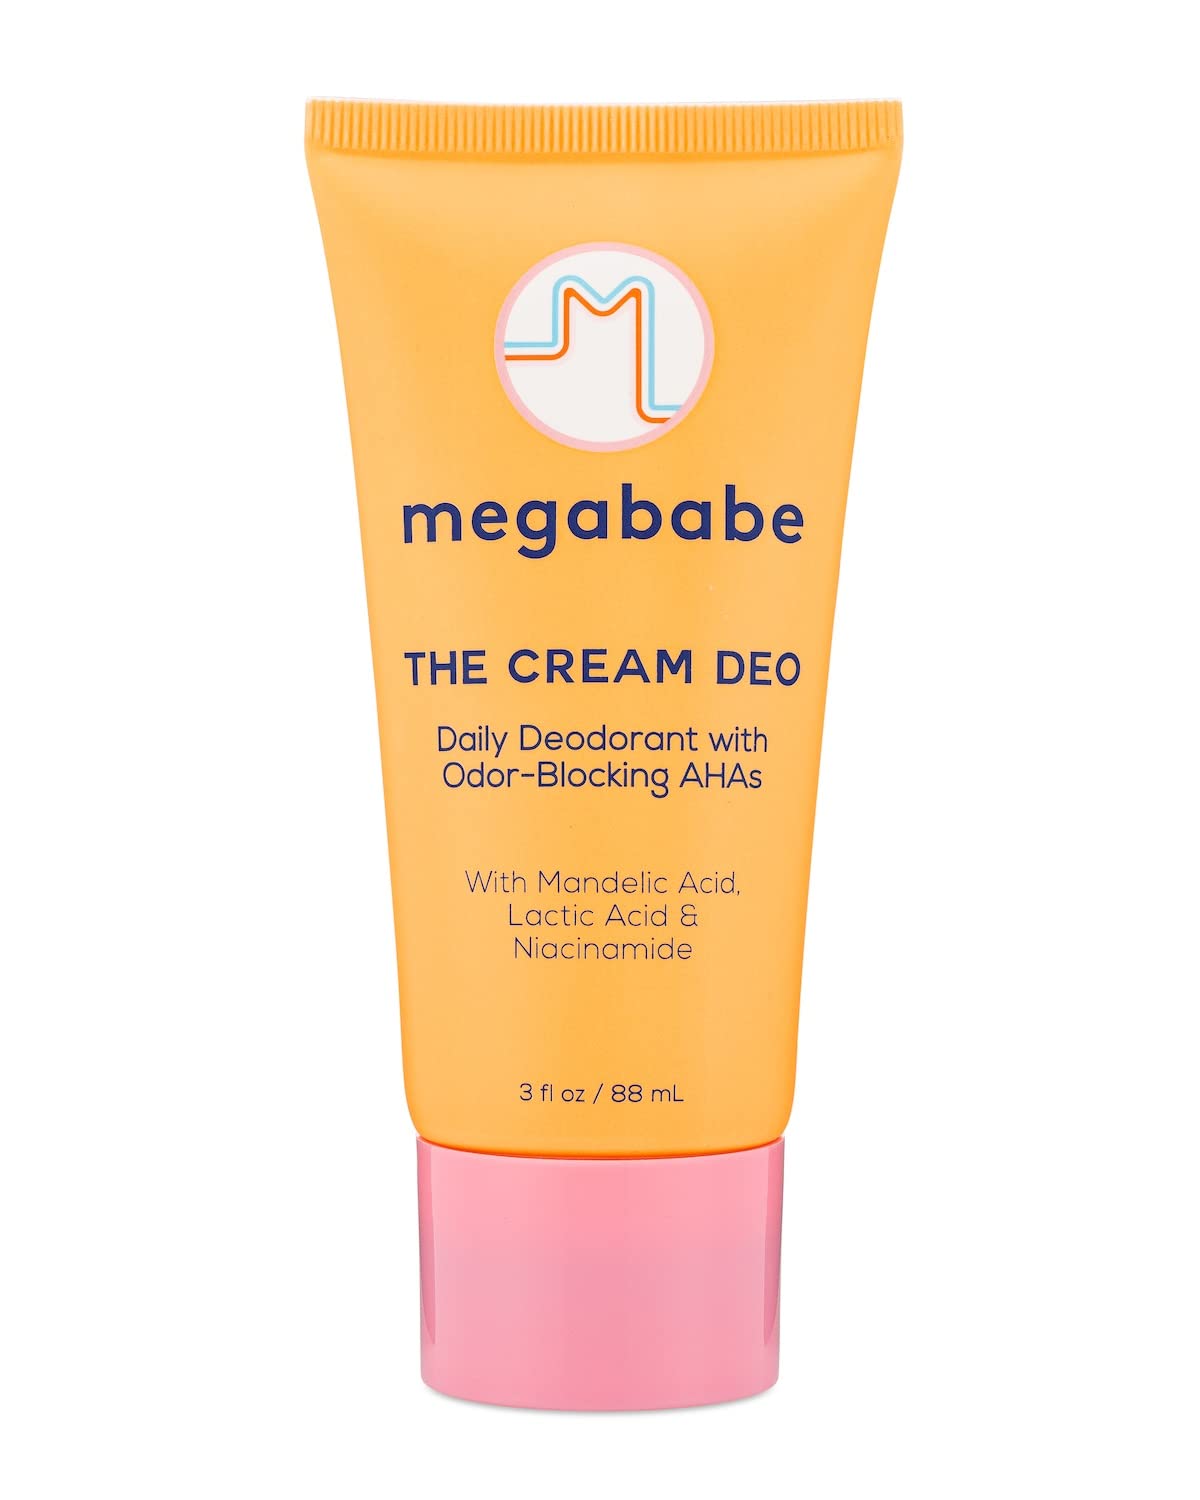 Megababe Daily Deodorant - The Cream Deo…